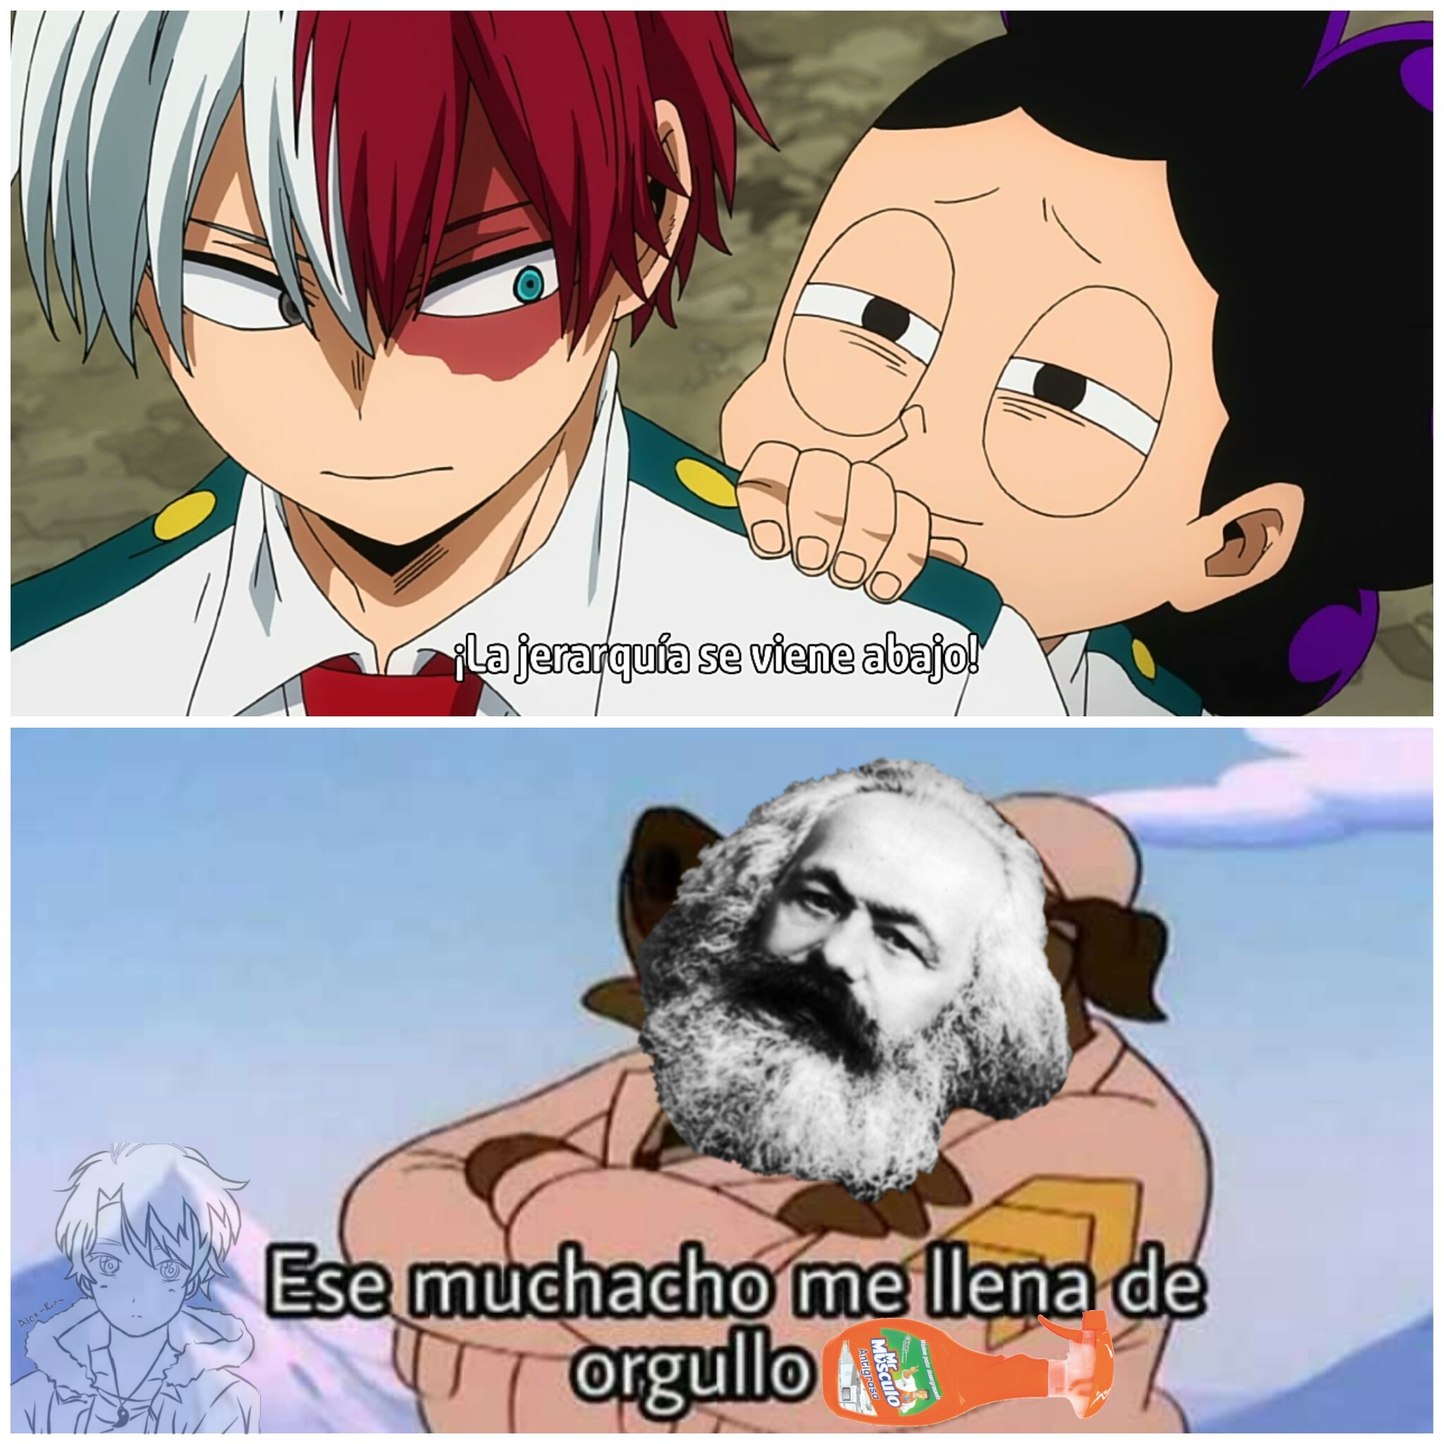 El meme es comunista